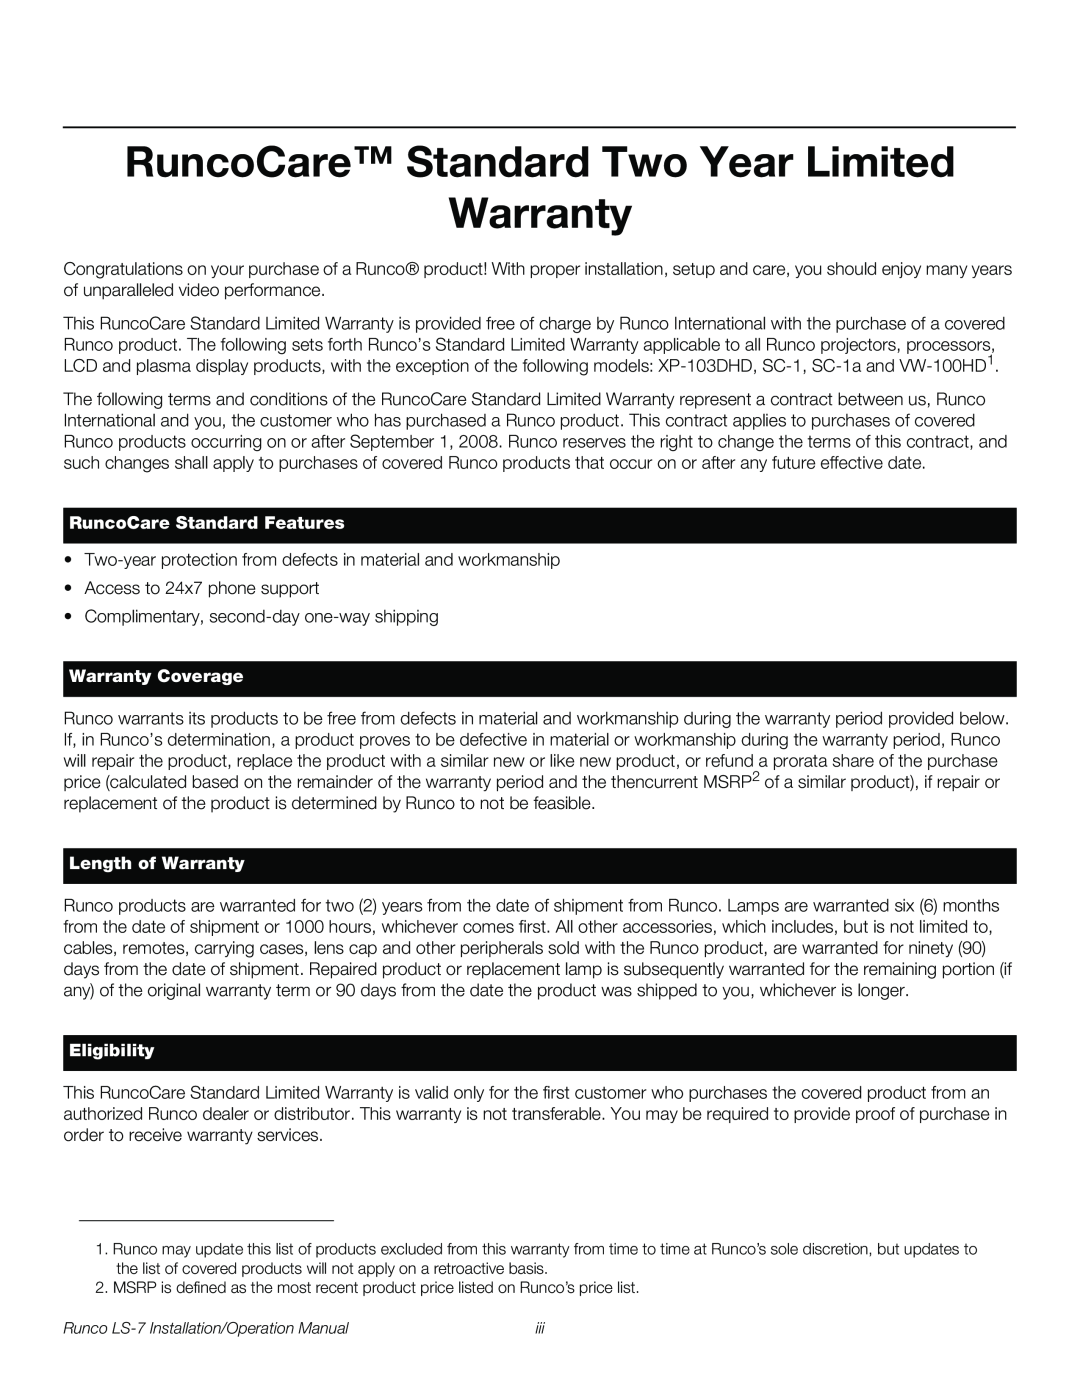 Runco LS-7 RuncoCare Standard Two Year Limited Warranty, RuncoCare Standard Features, Warranty Coverage, Eligibility 